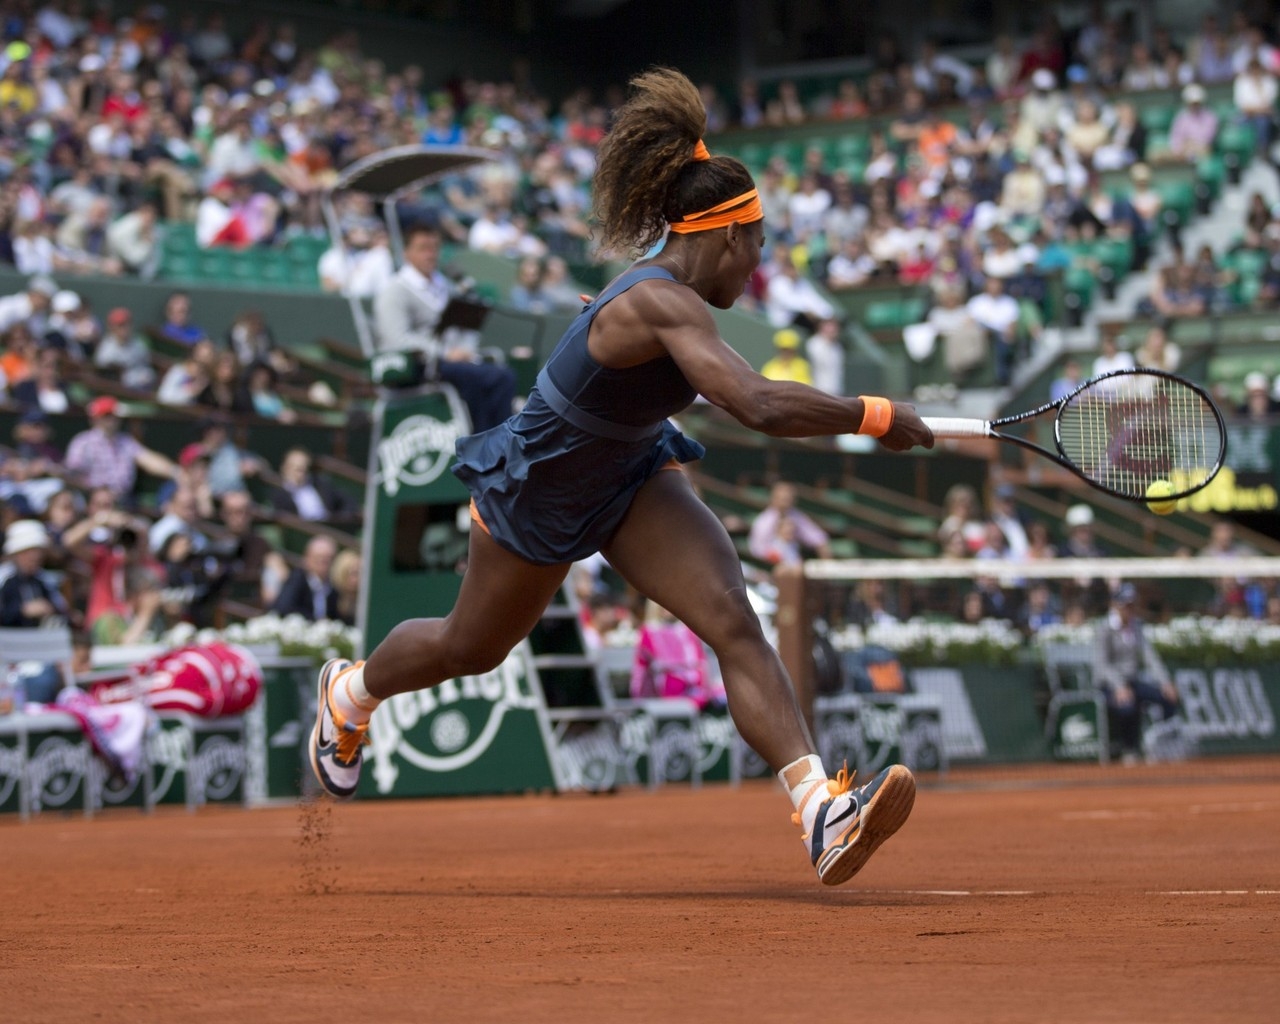 Serena Williams for 1280 x 1024 resolution